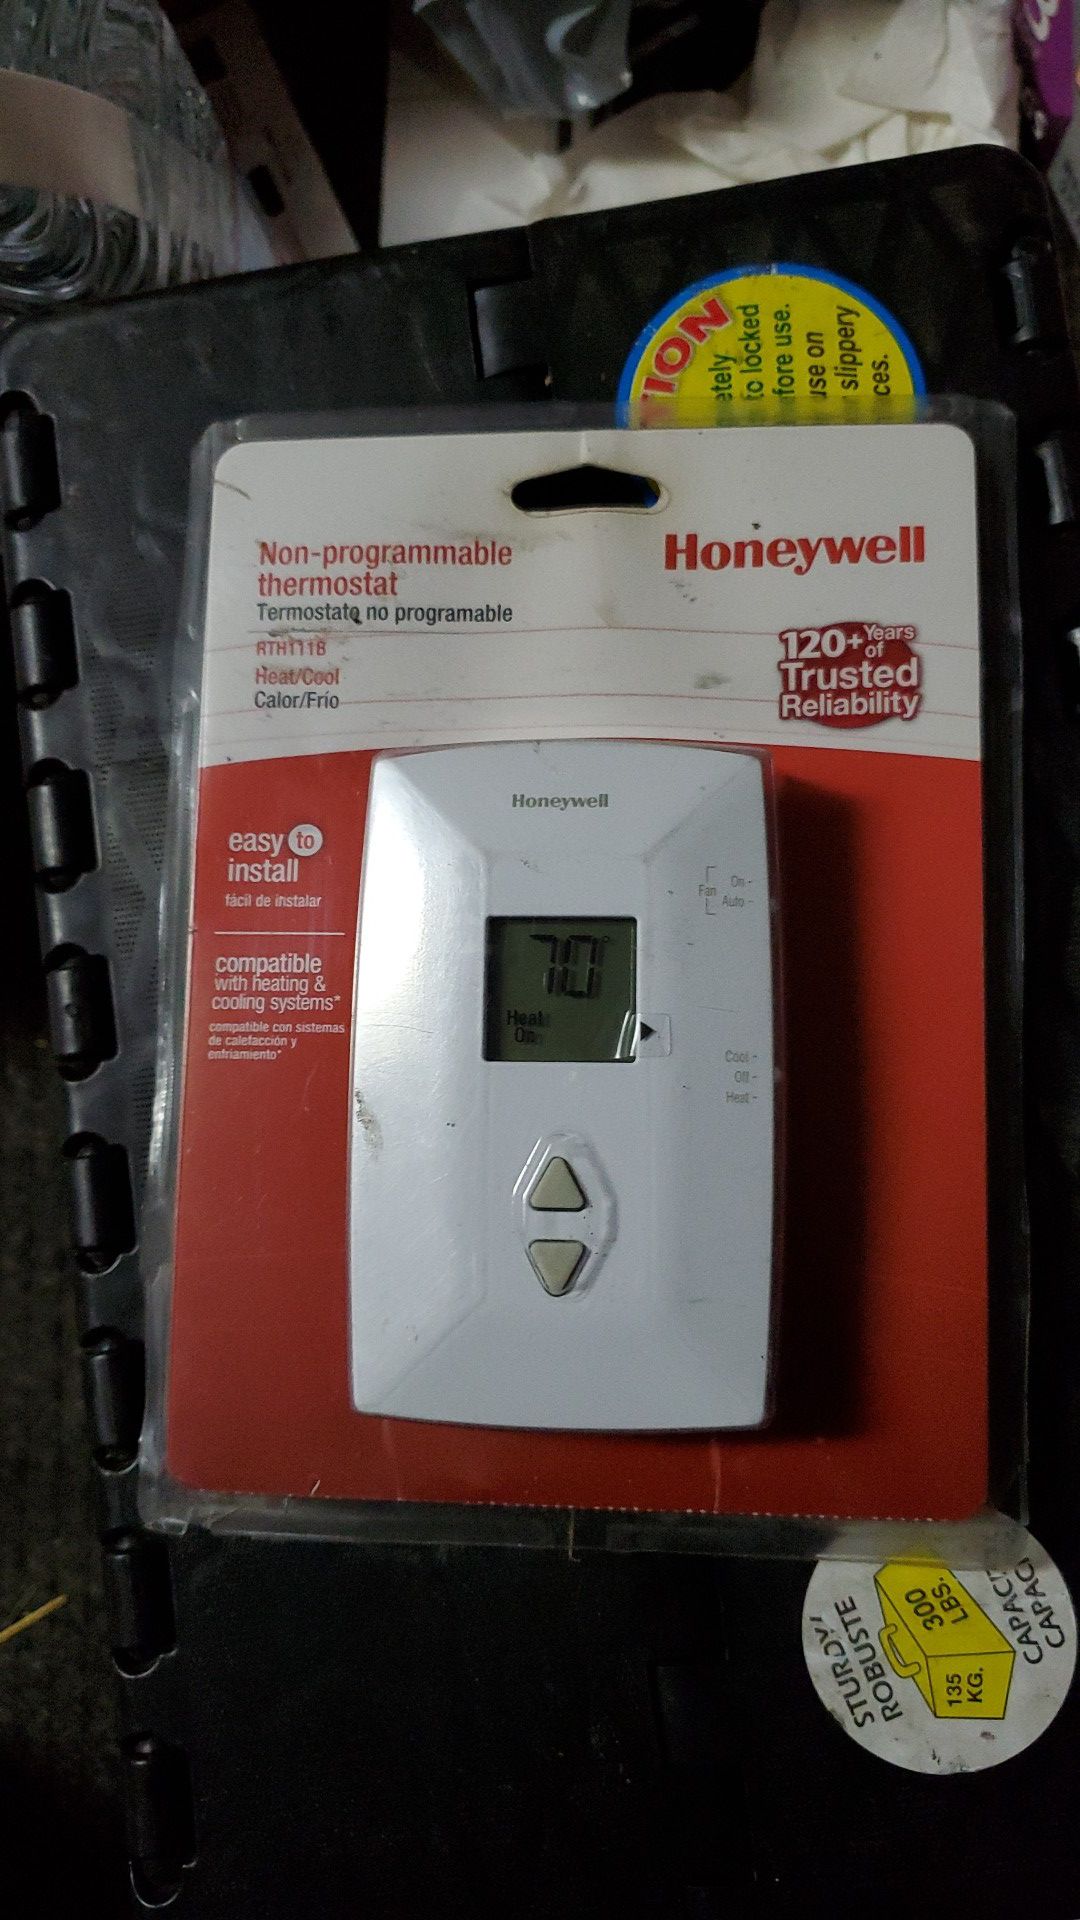 Honeywell's thermostats